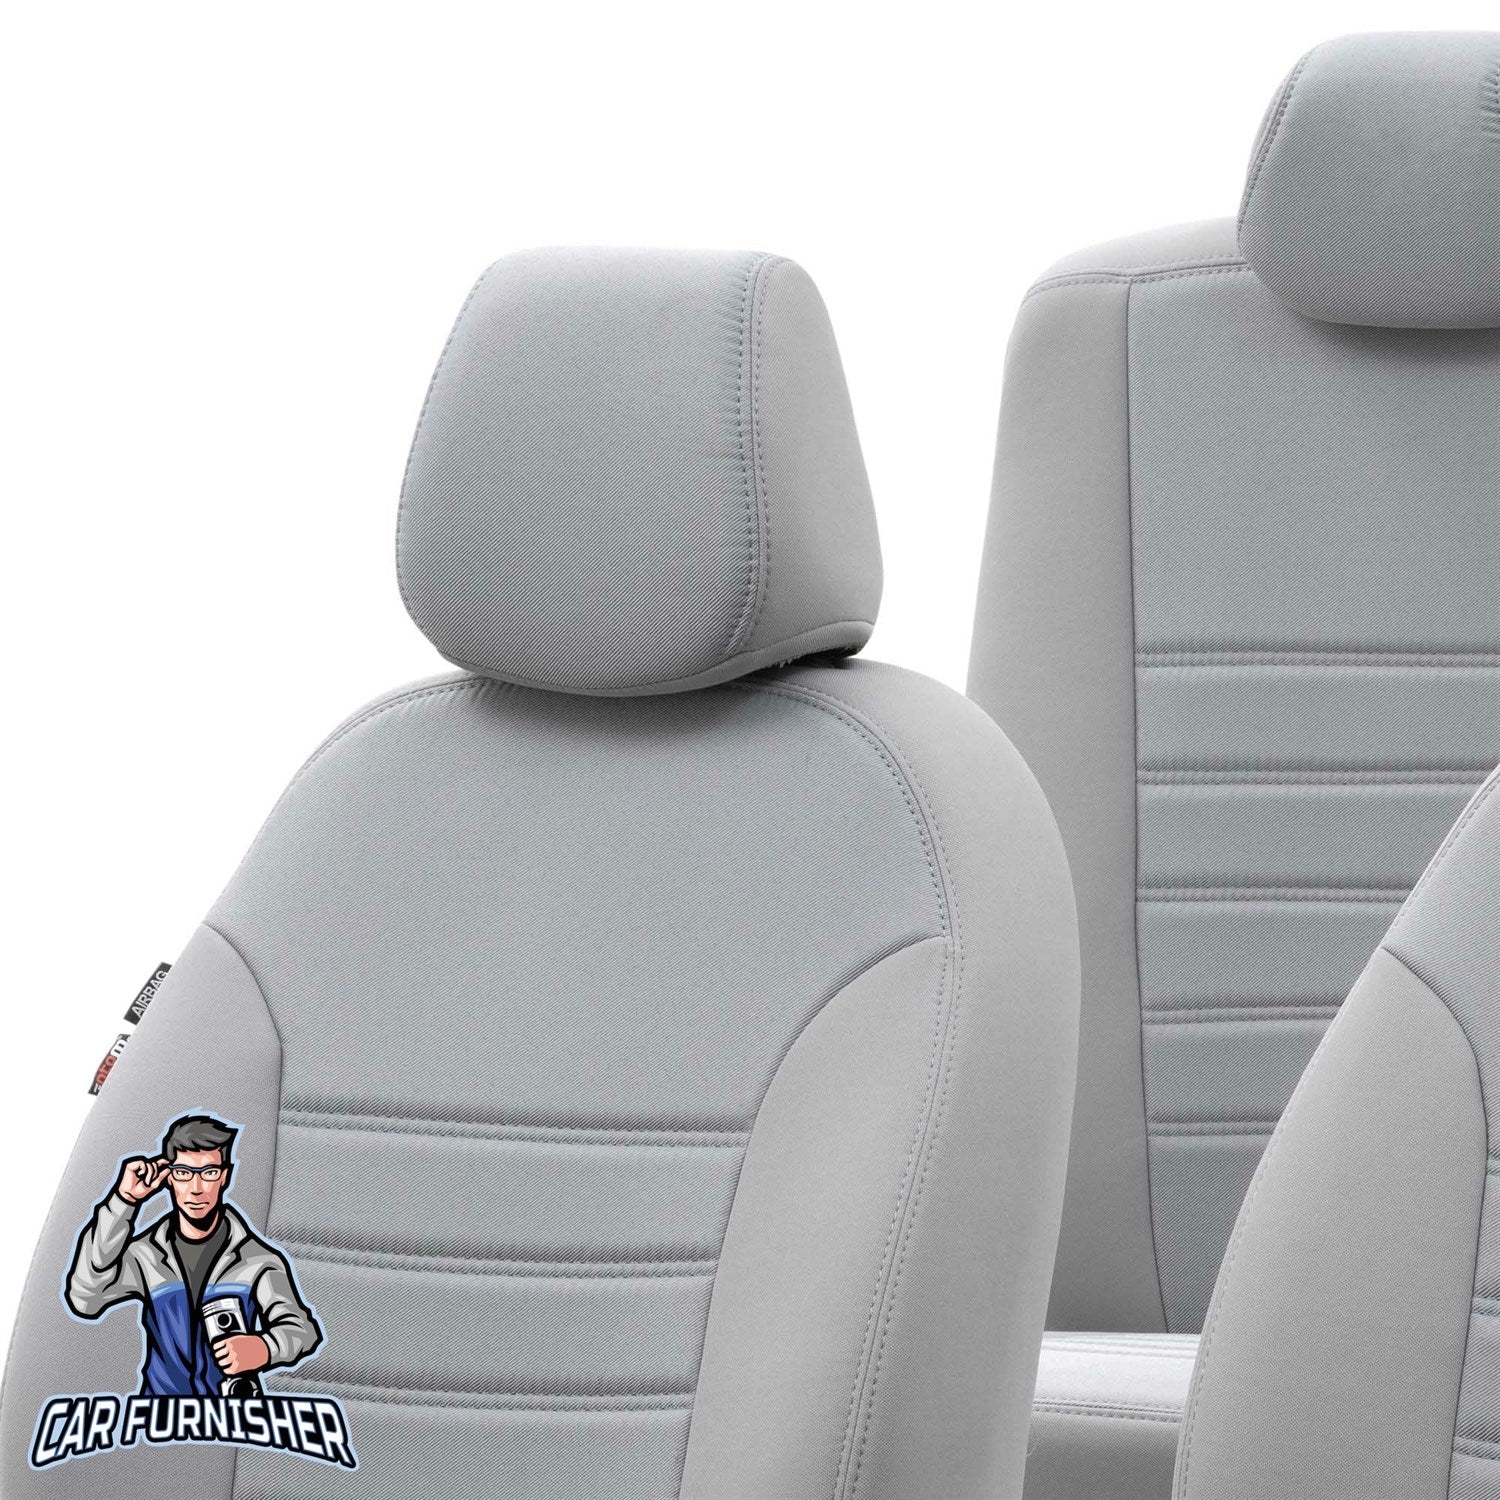 Toyota Auris Seat Cover Original Jacquard Design Dark Beige Jacquard Fabric